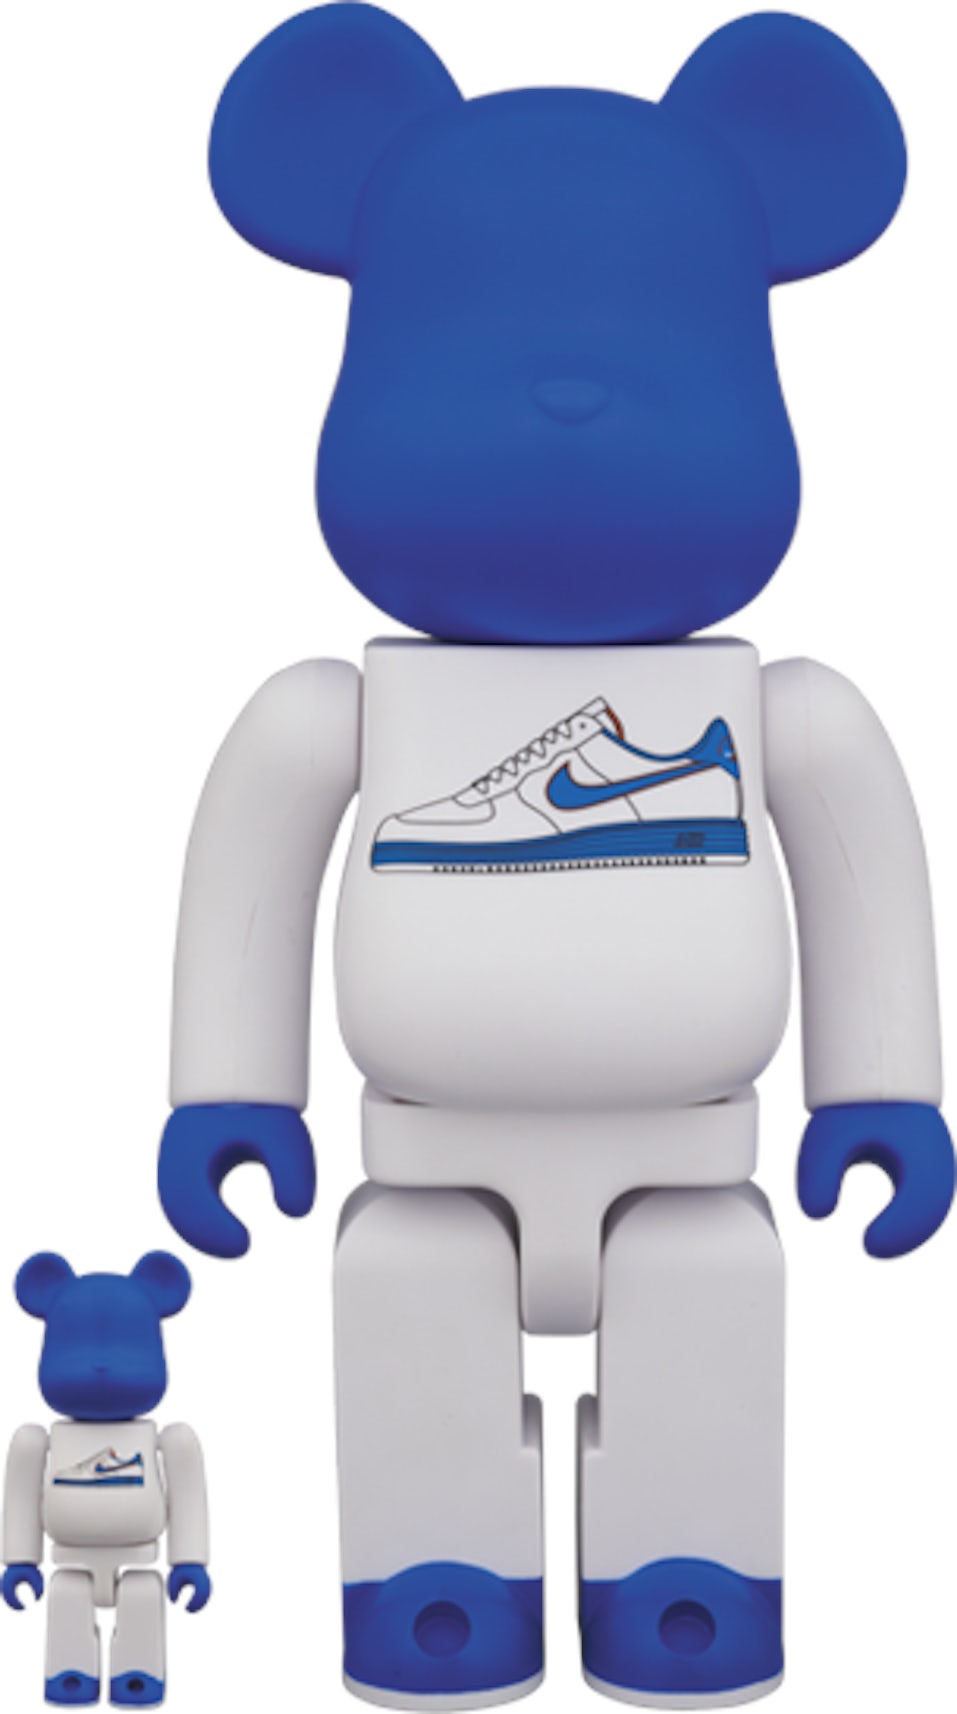 Bearbrick x Nike Lunar Force 1 400% White/ Blue